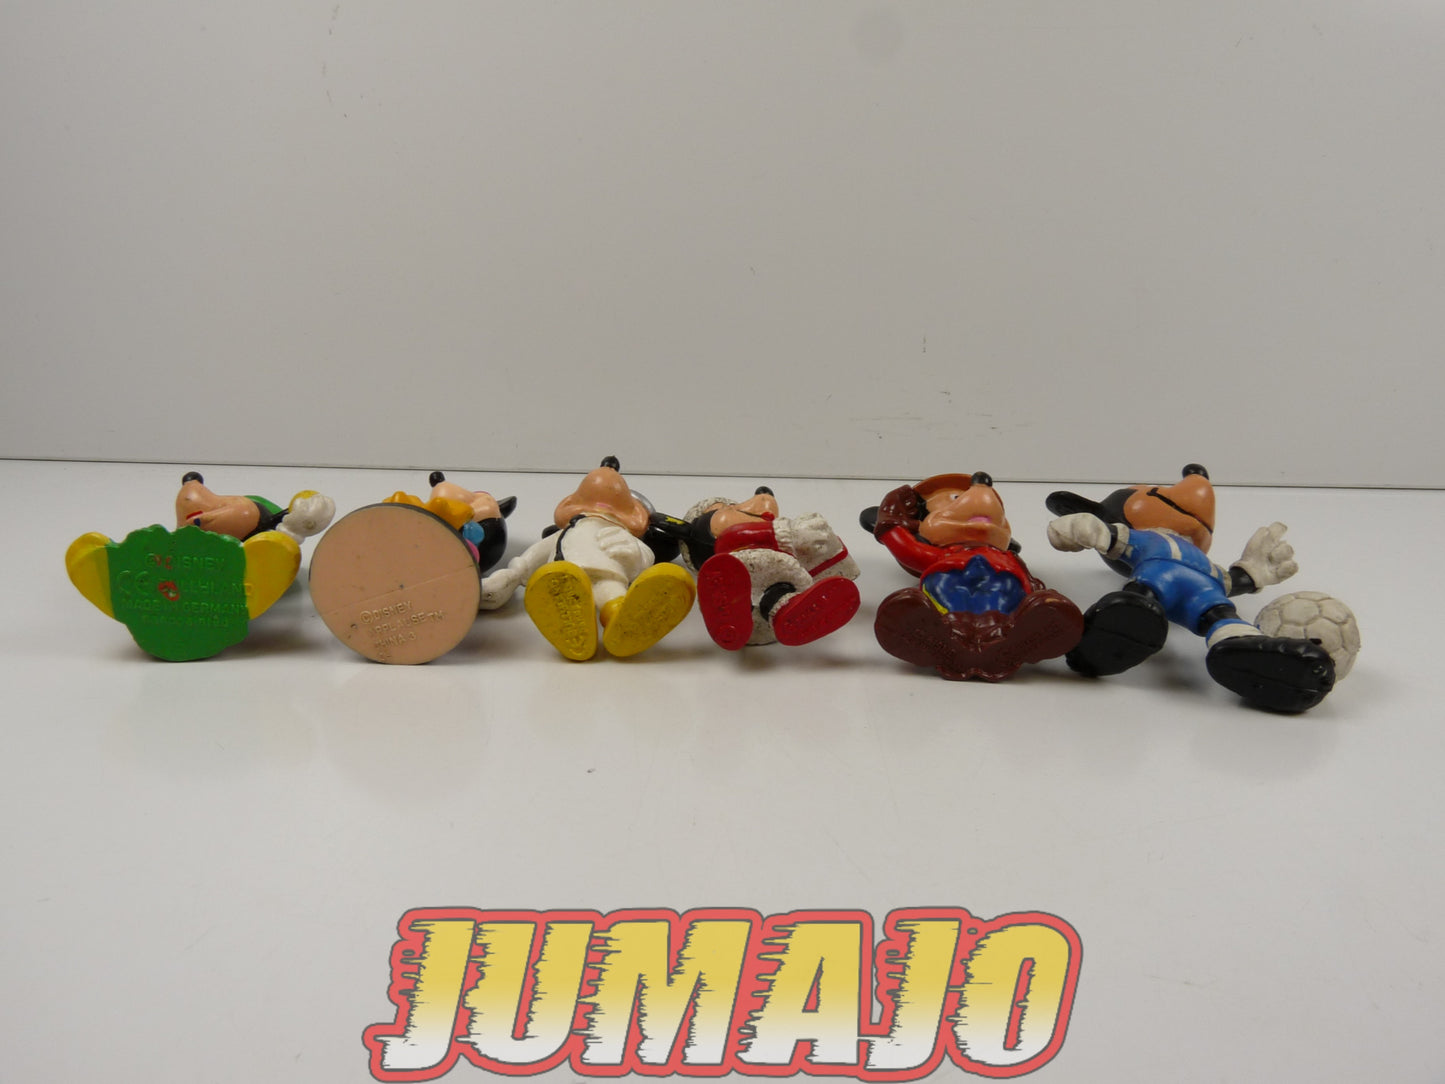 FIG22 lot 6 figurines PVC COMICS SPAIN/DISNEY BULLY 6cm : Mickey football, peintre, docteur, Minnie